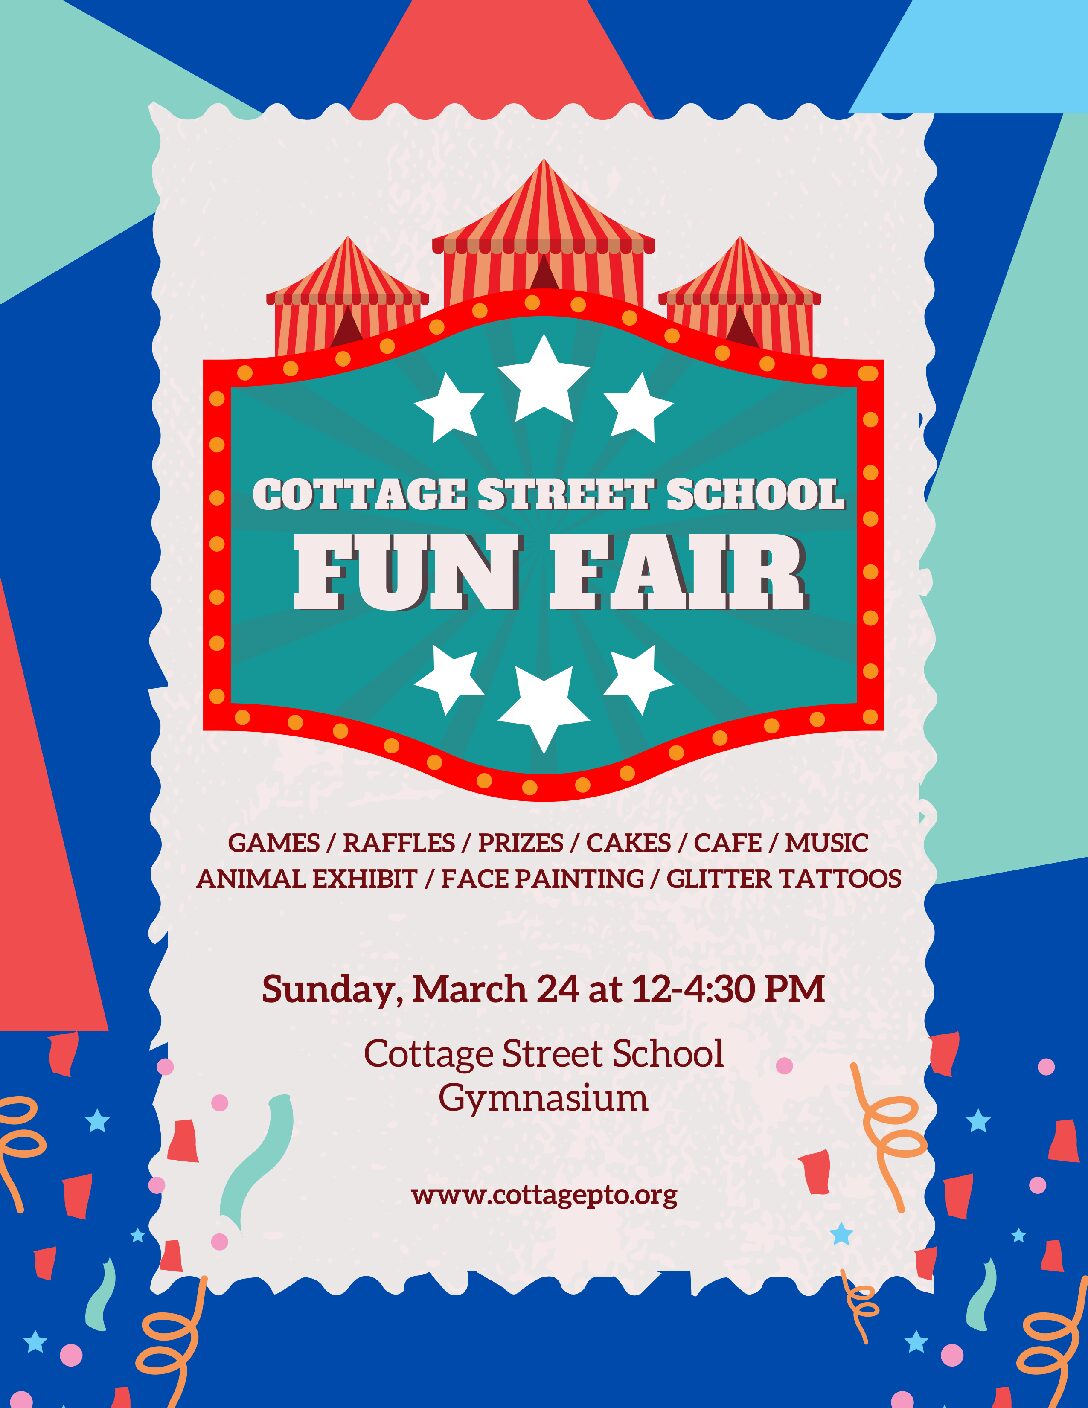 Come to Fun Fair on March 24th!